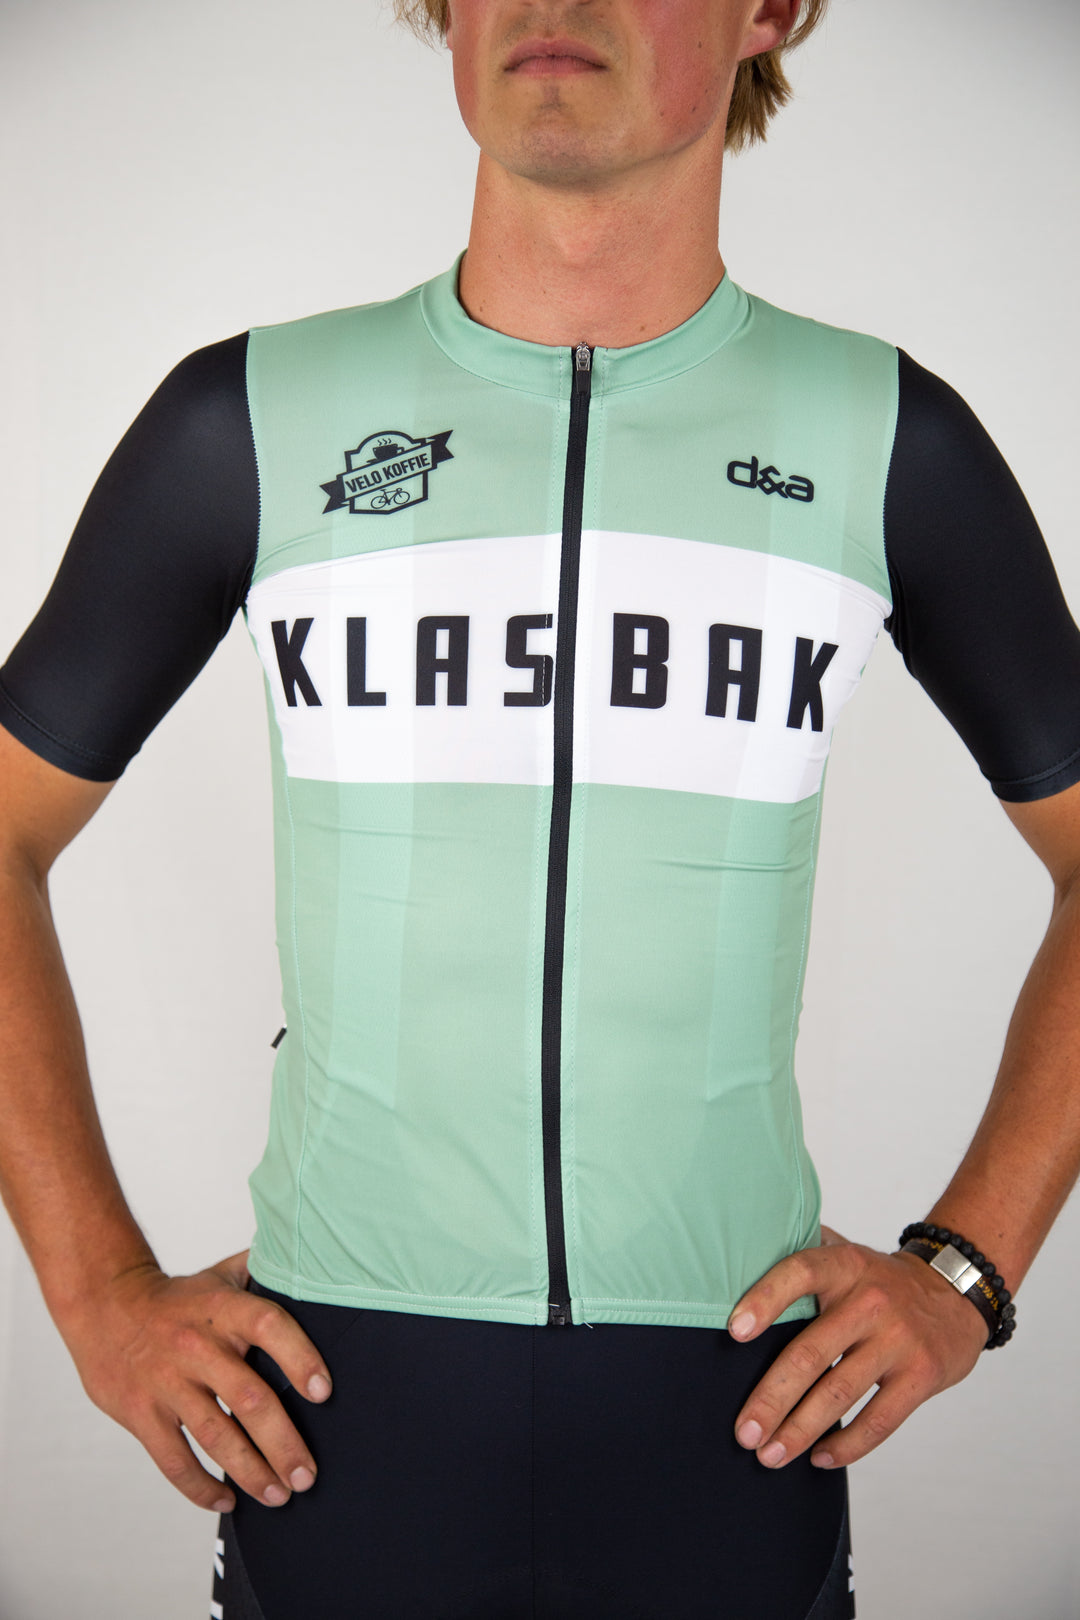 D&amp;A - Cycling jersey Klasbak